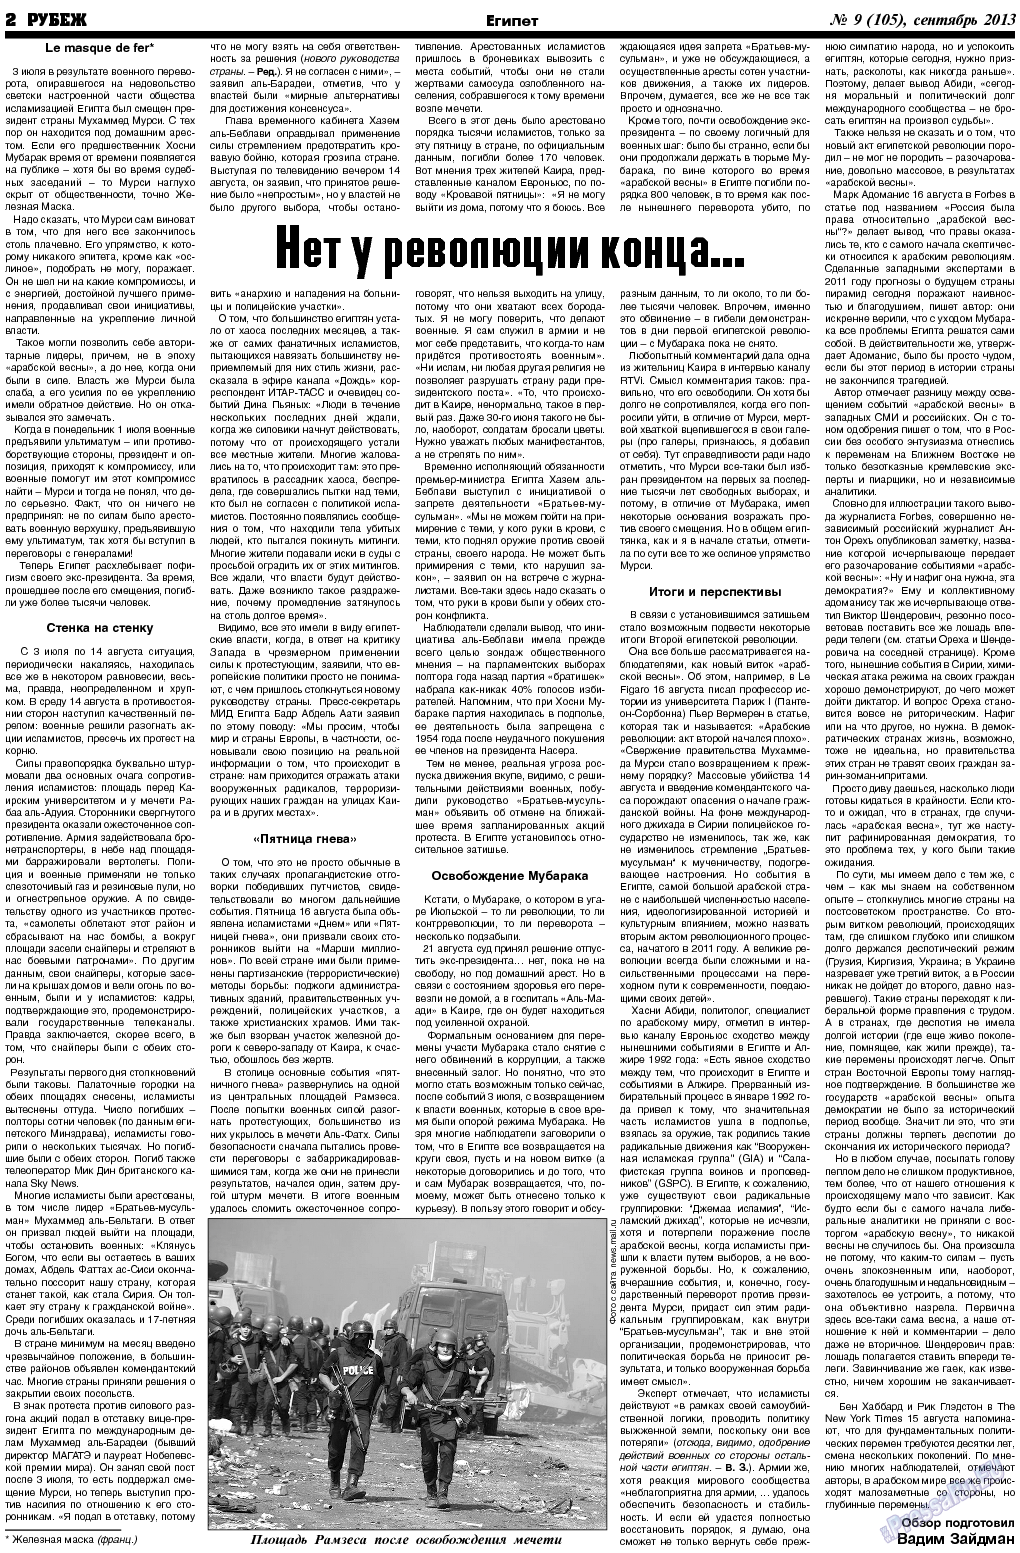 Рубеж, газета. 2013 №9 стр.2